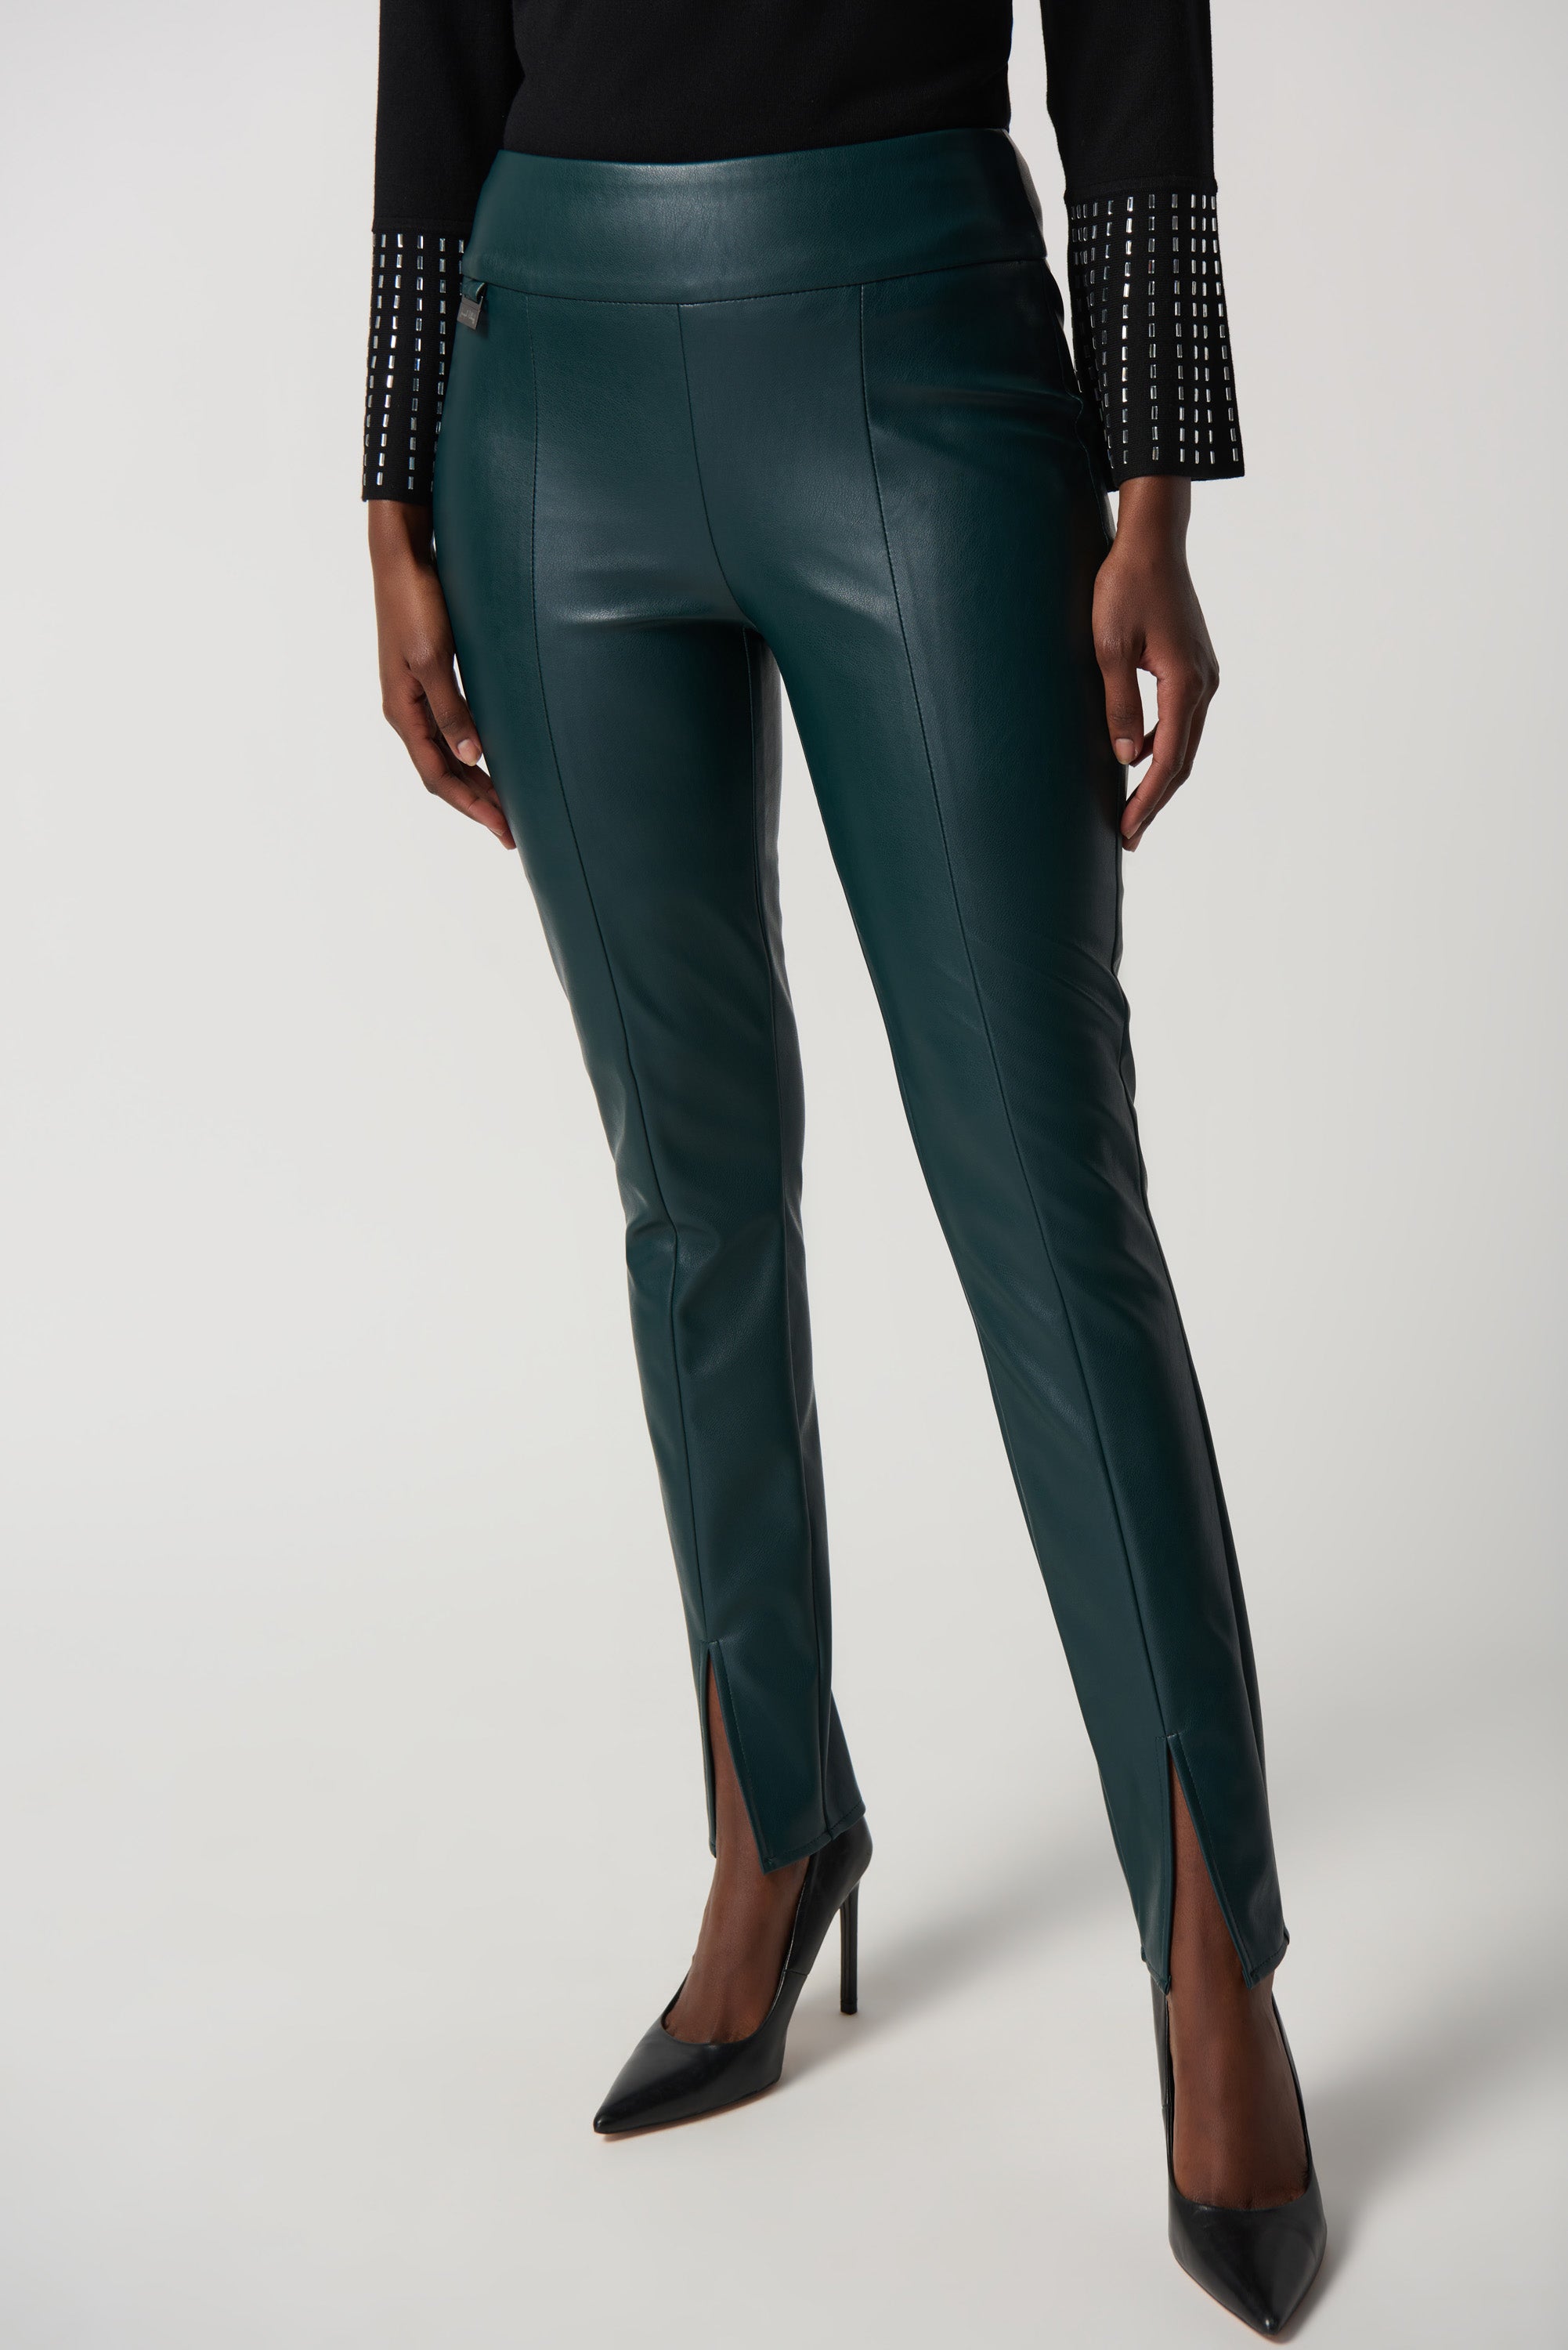 Joseph Ribkoff Alpine Green Faux Leather Slim Fit Pull-On Pants